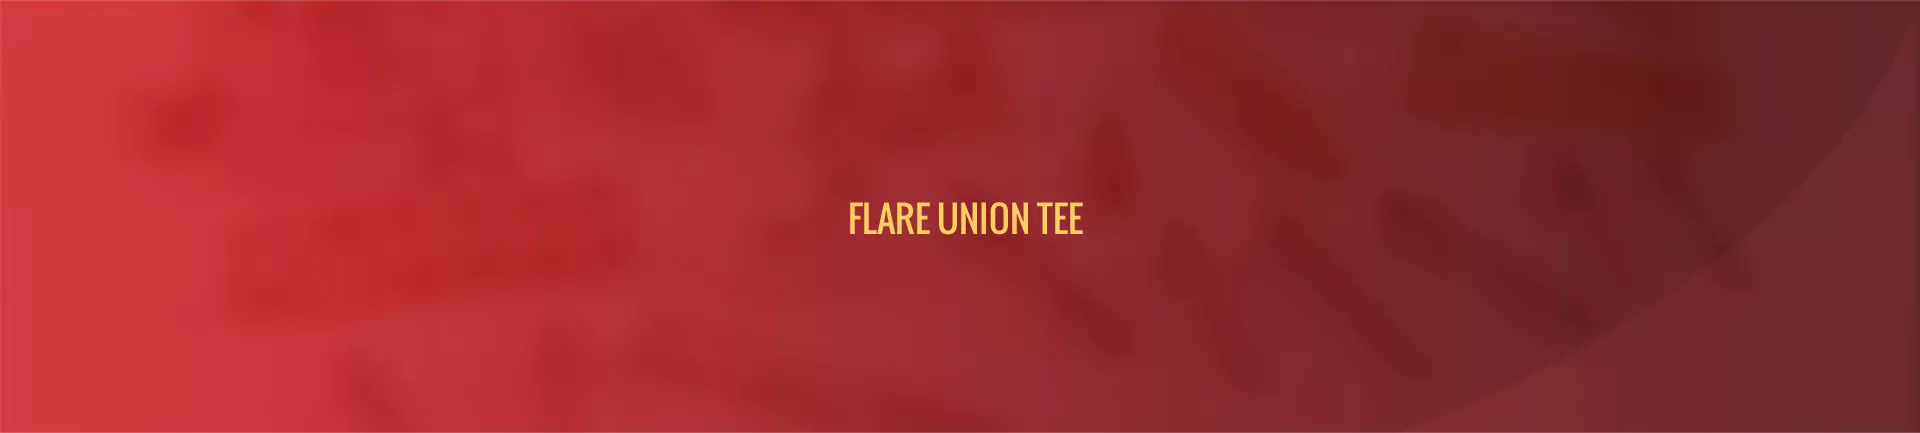 flare-union-tee-banner